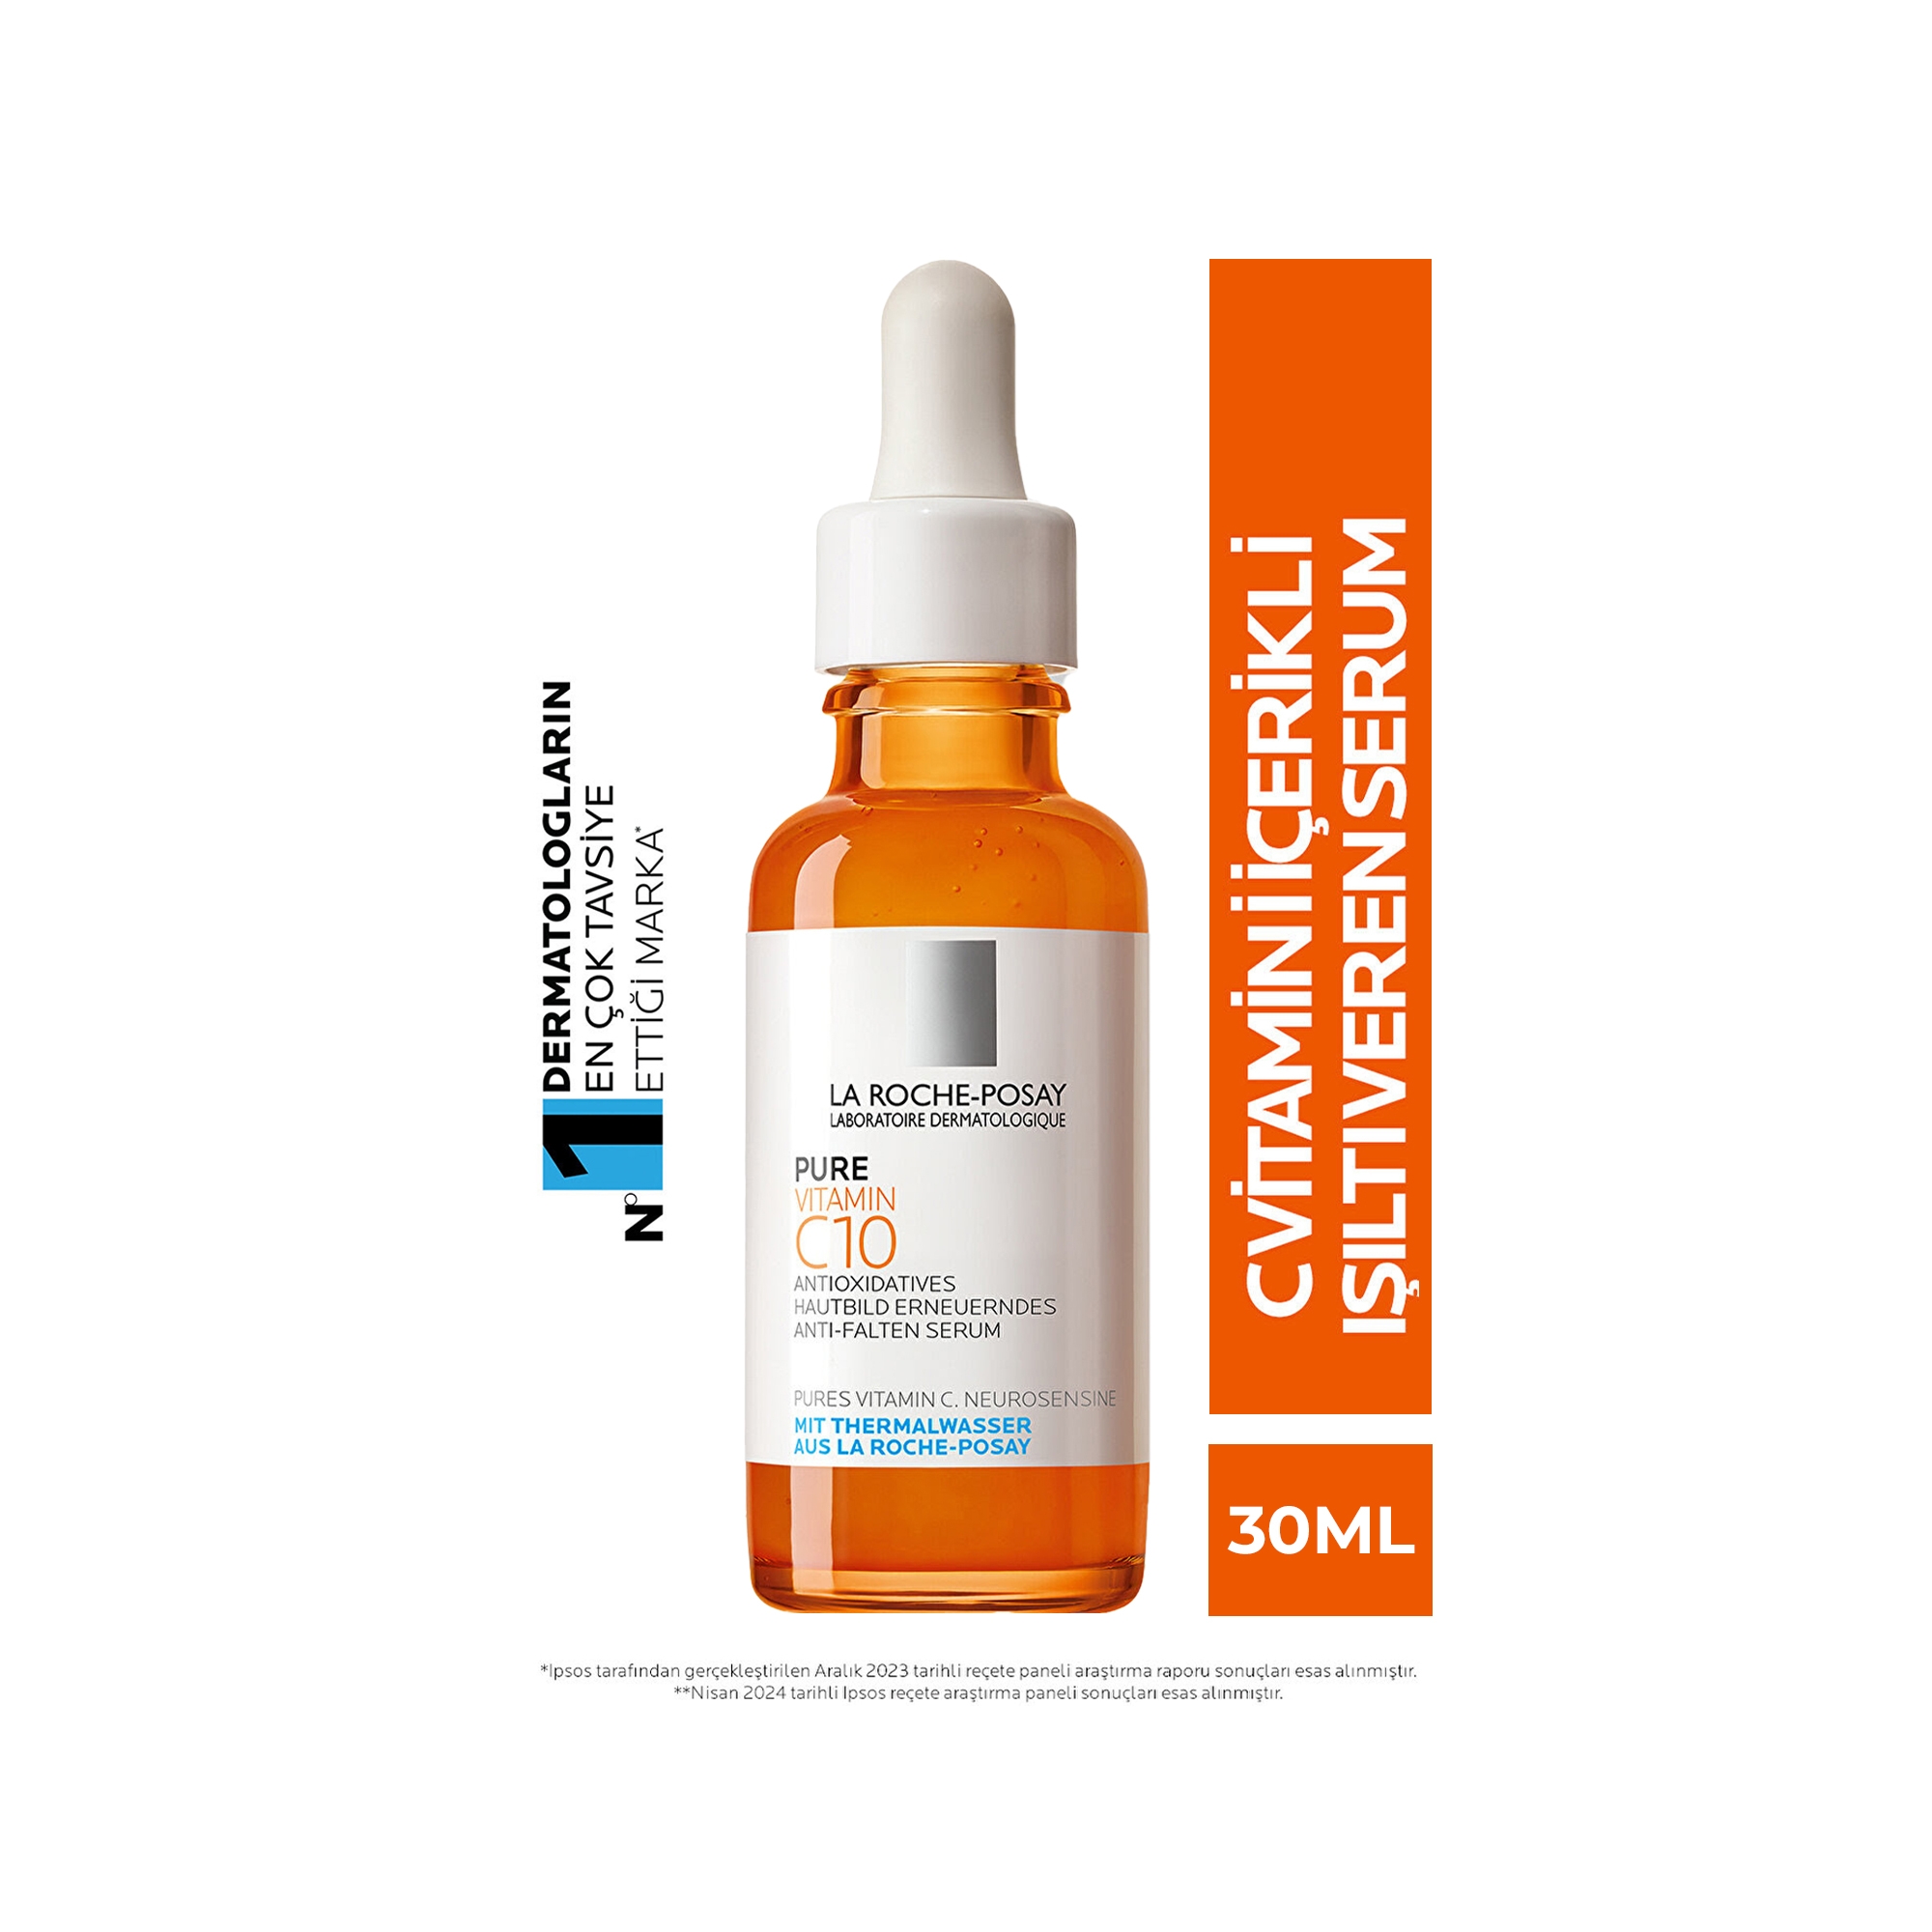 https://sch.sachane.com/images/thumbnails/383/383/detailed/33/la-roche-posay-saf-c-vitamini-isilti-veren-antioksidan-serum-30-ml-LRPSY-144-ikinci-gorsel.jpg